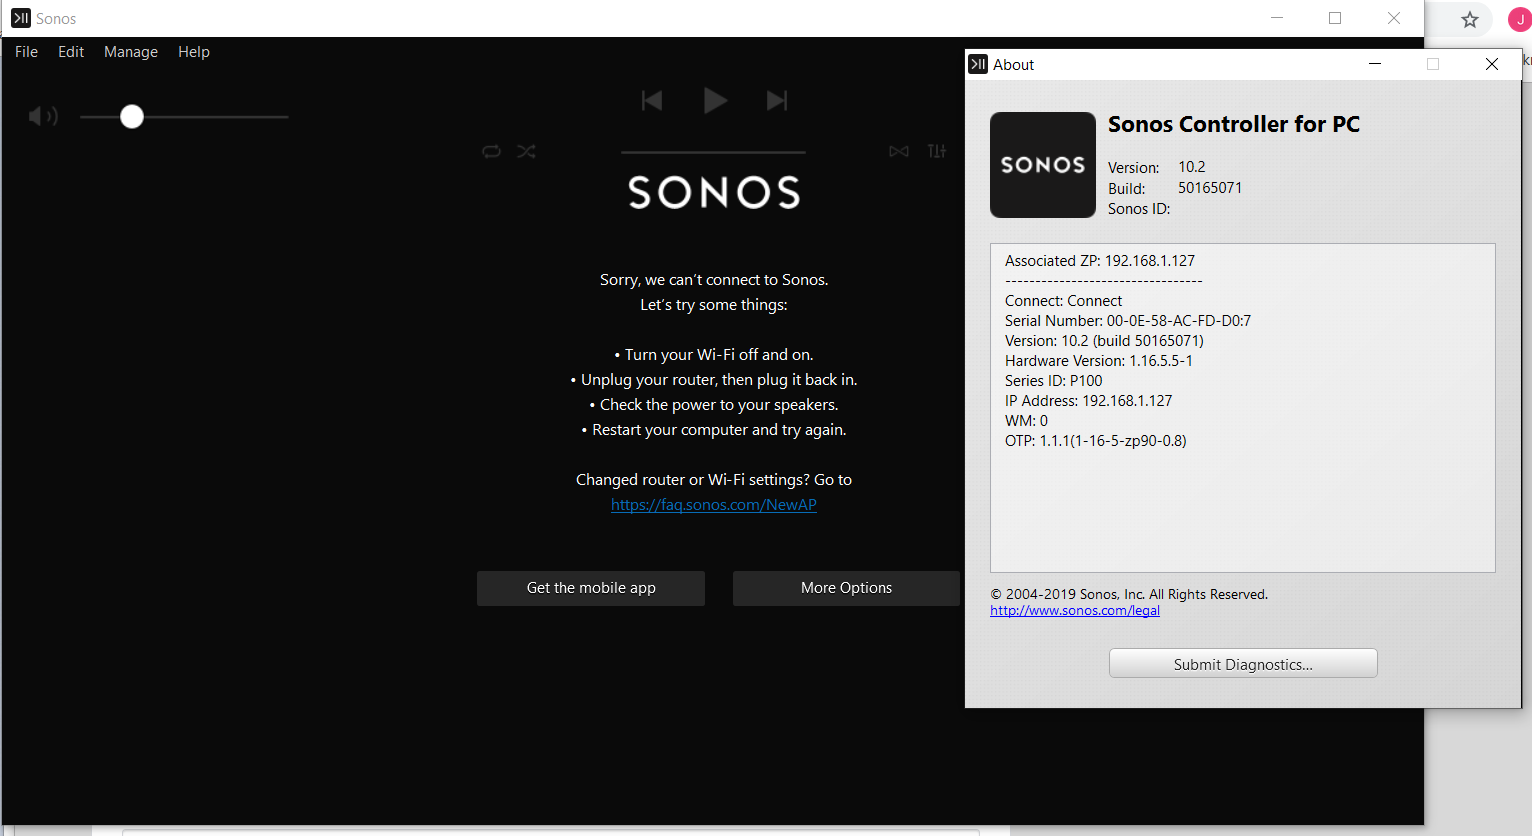 sonos download for pc windows 10